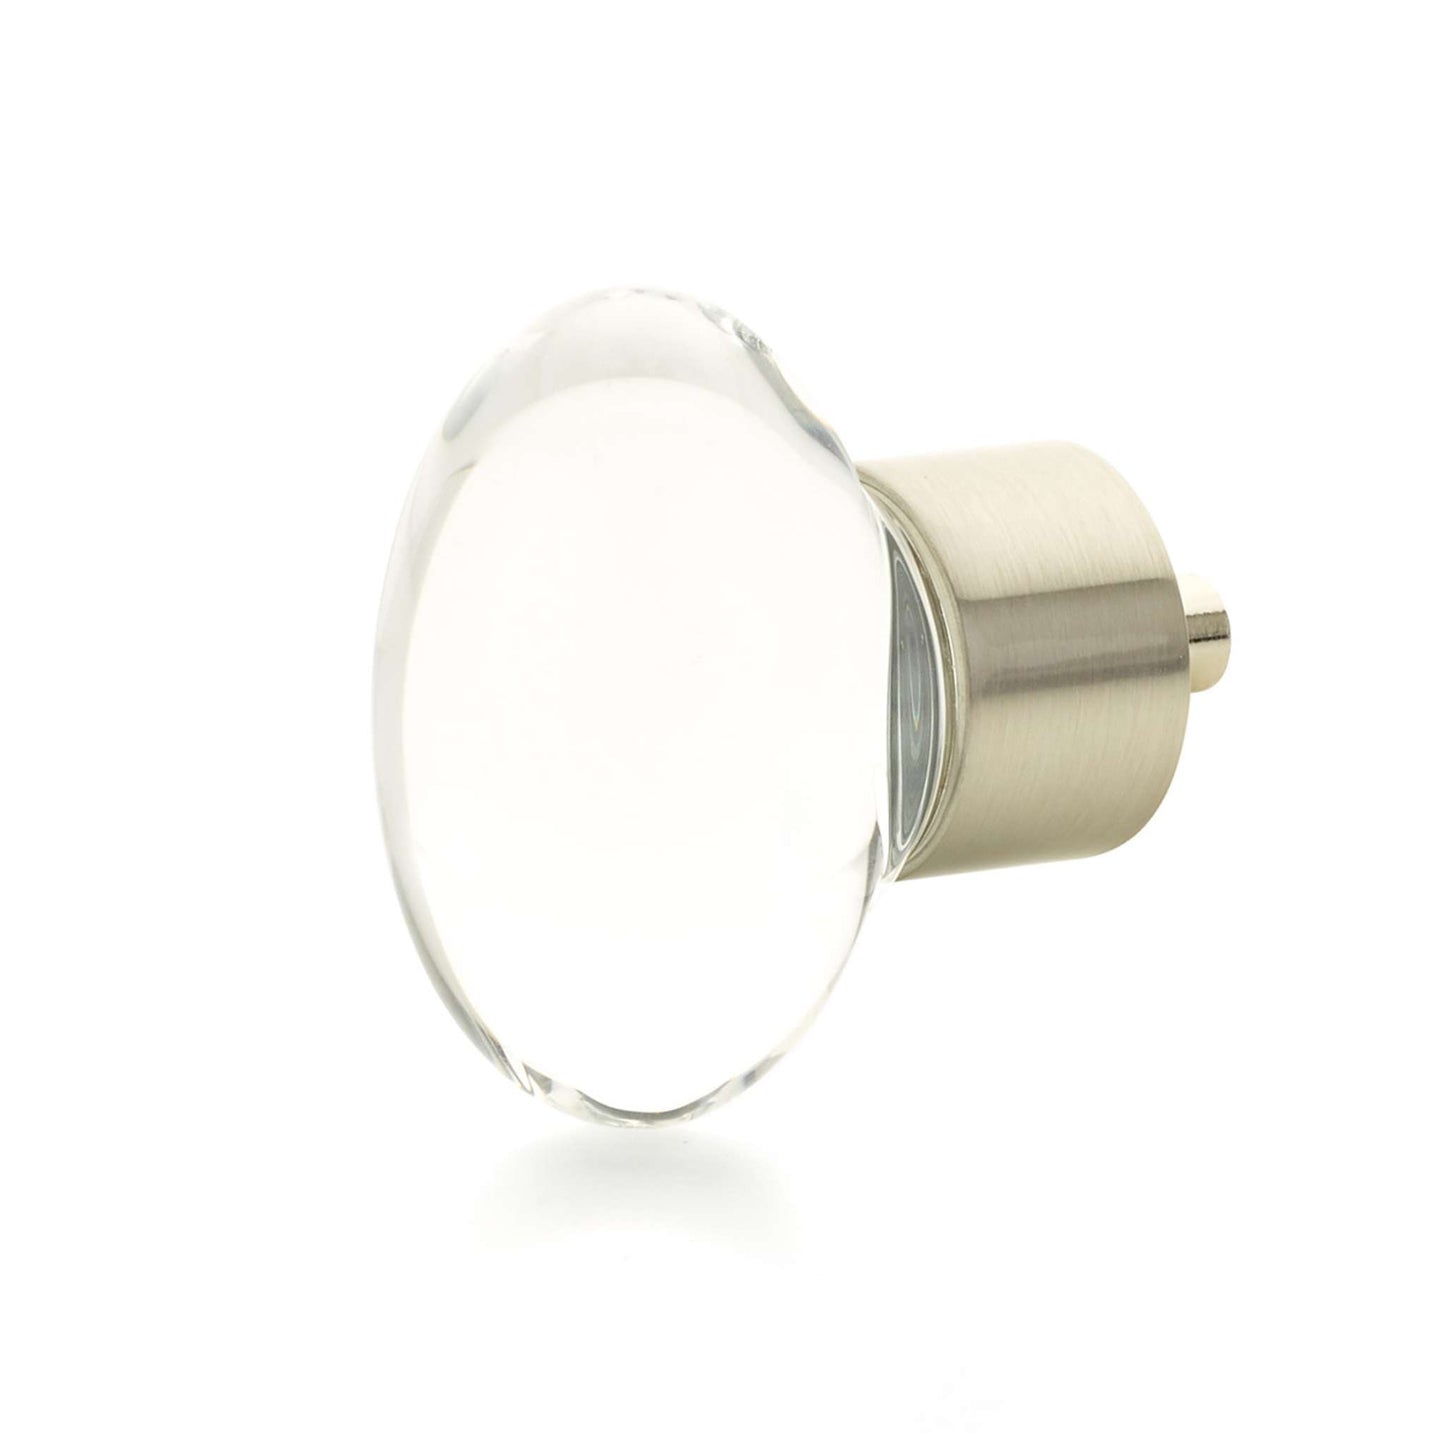 Schaub and Company - City Lights Cabinet Knob Oval Glass